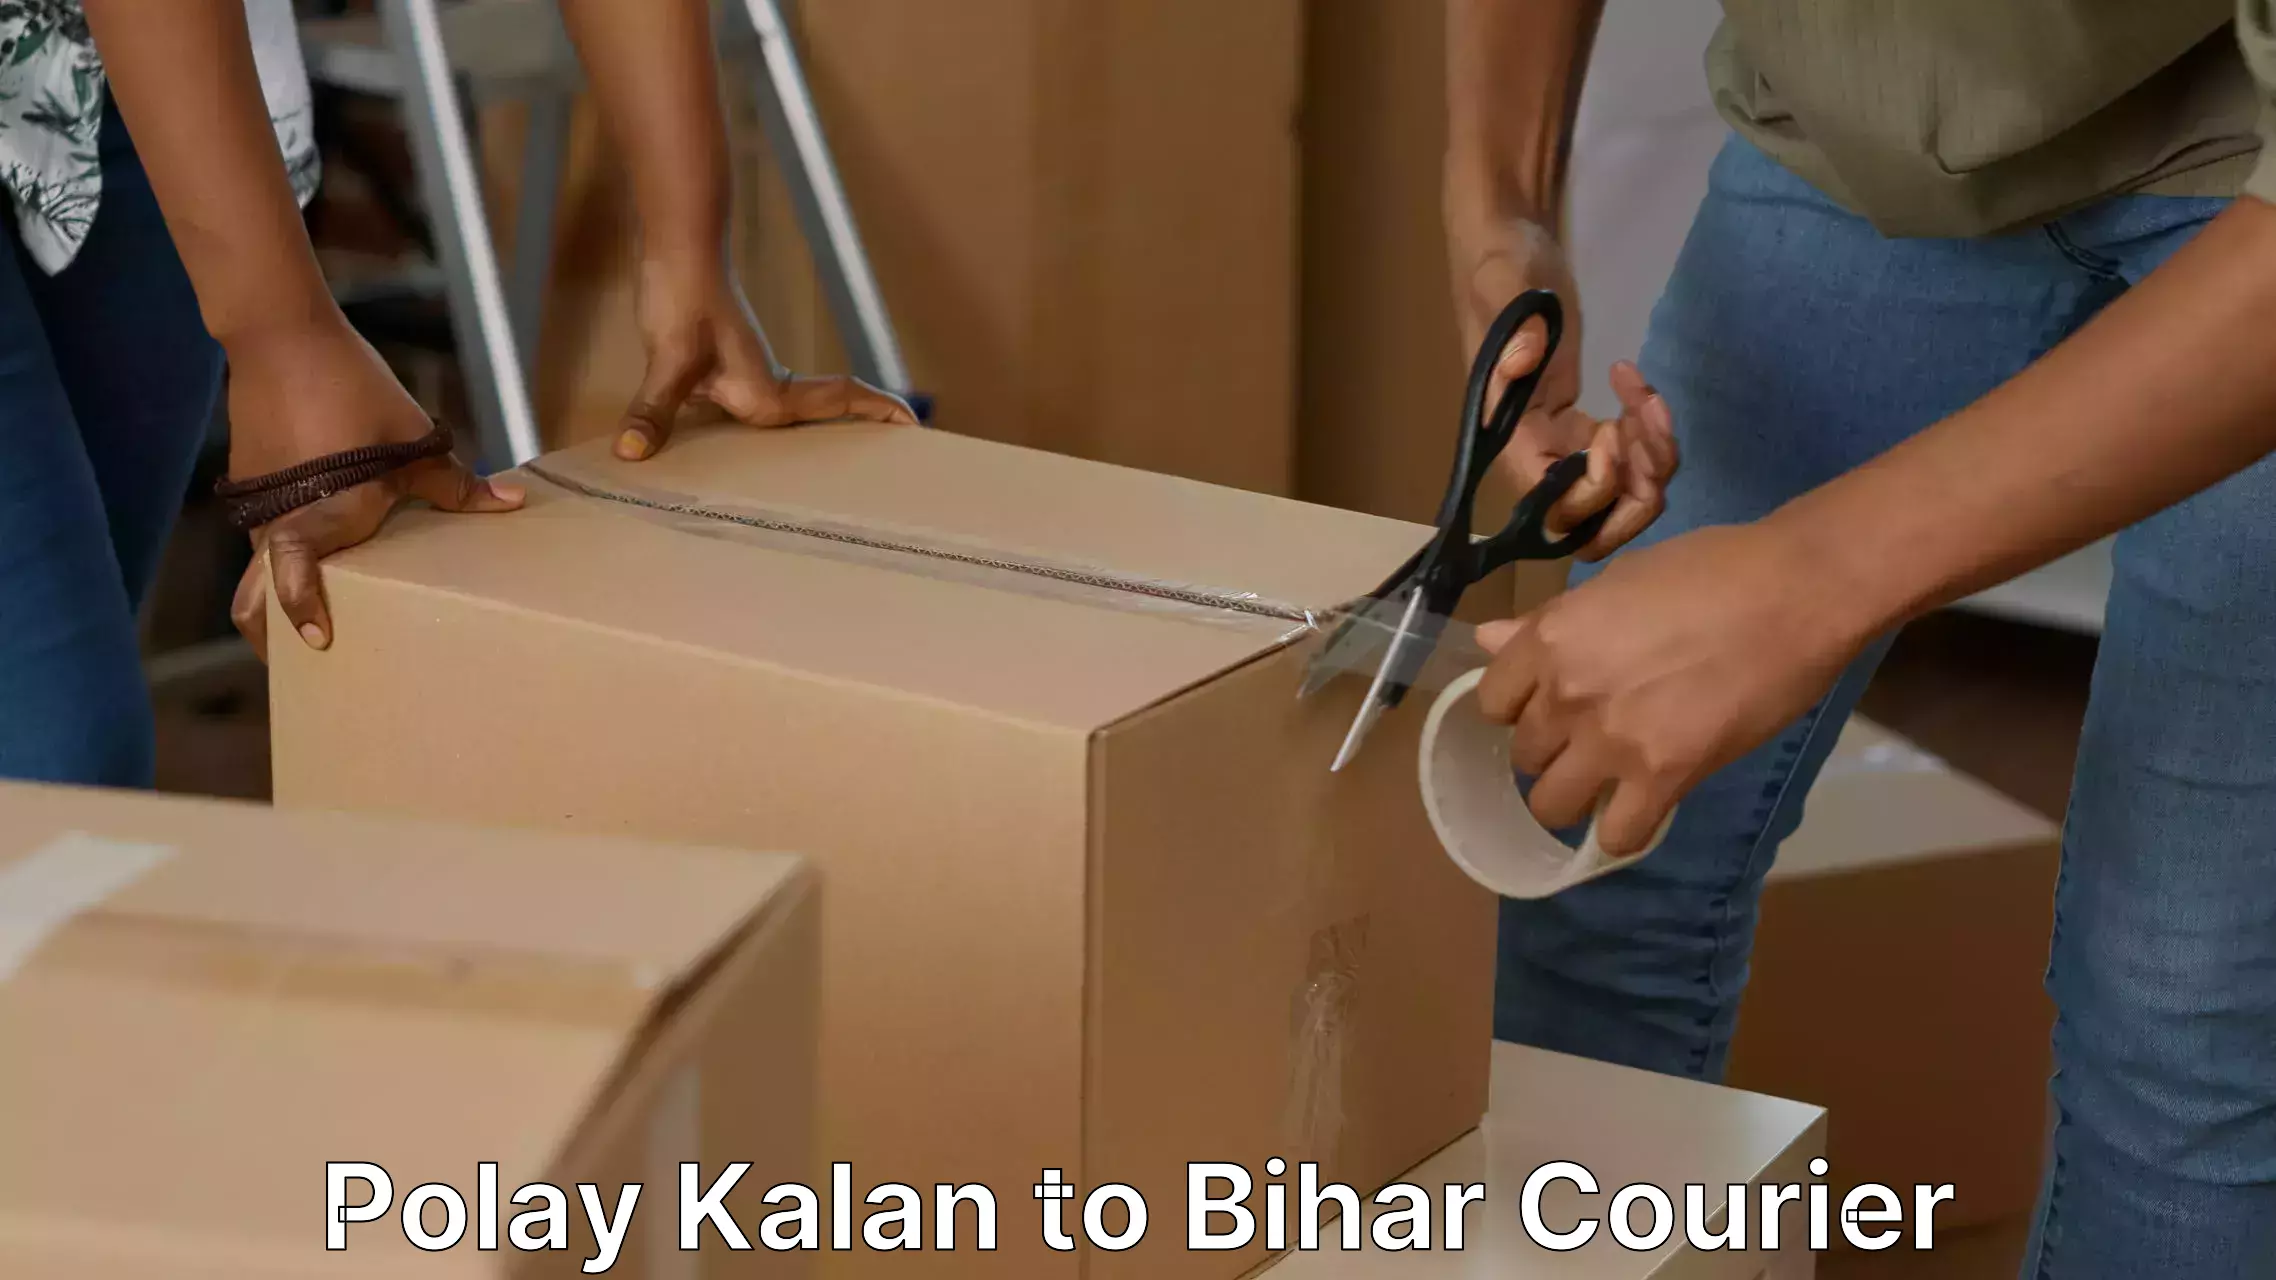 Trusted household movers Polay Kalan to Bihar